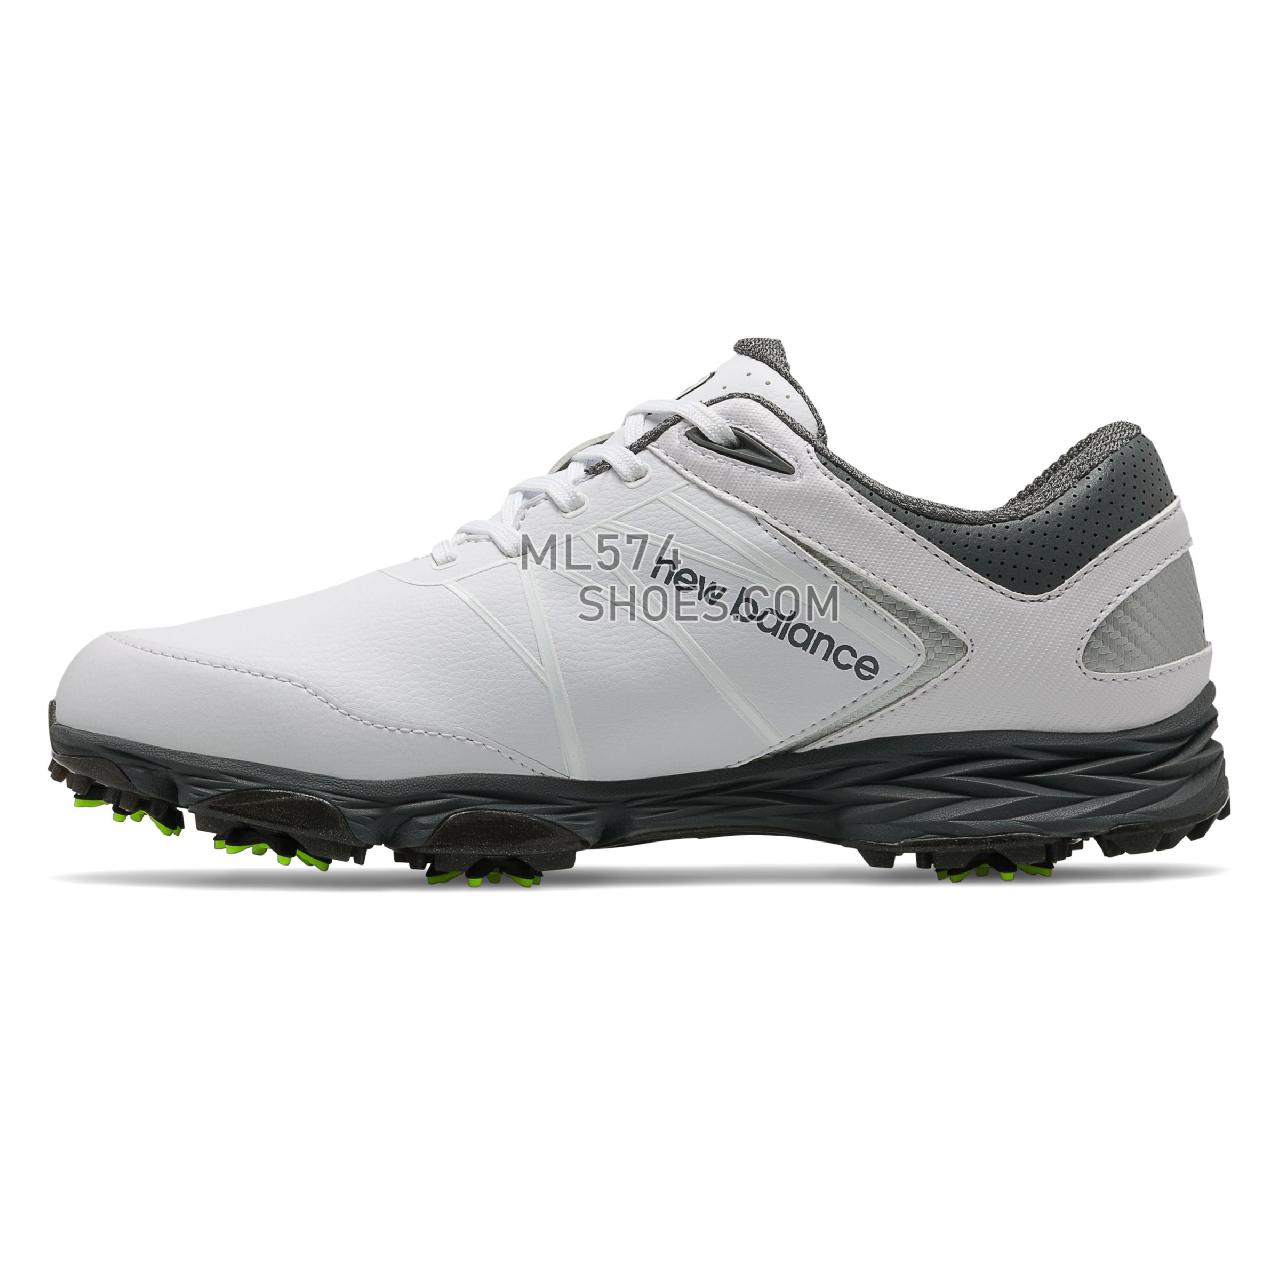 New Balance Striker - Men's Golf - White with Grey - NBG2005WG